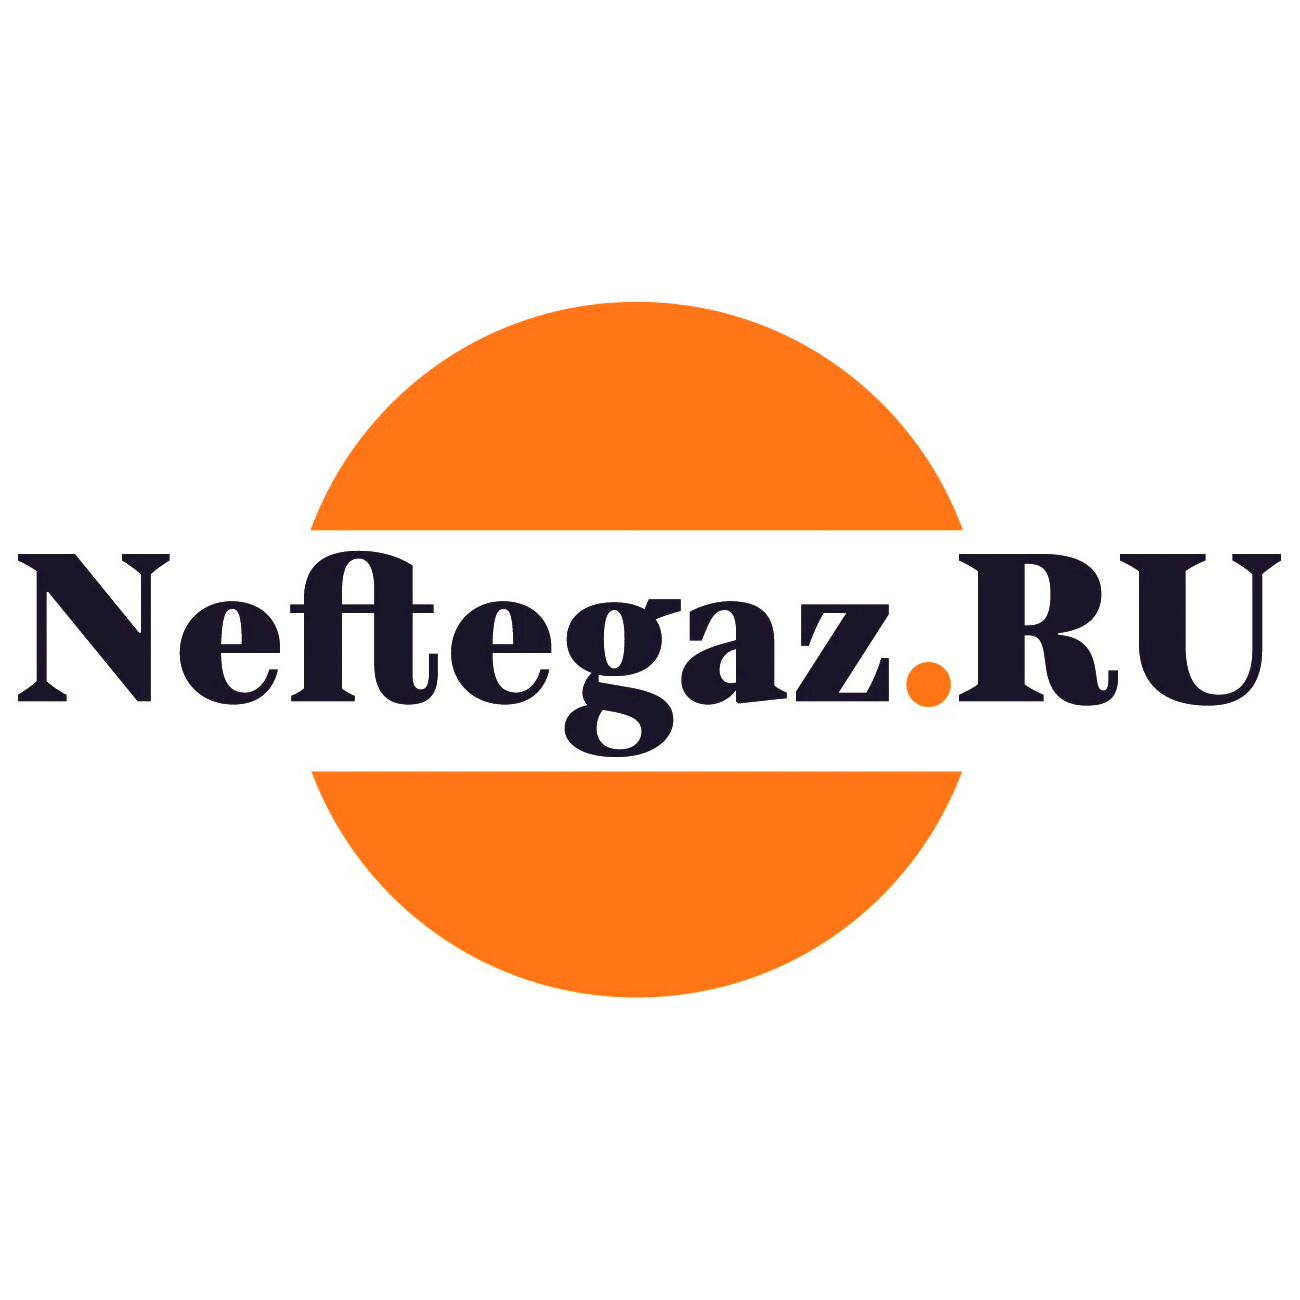 Neftegas.ru